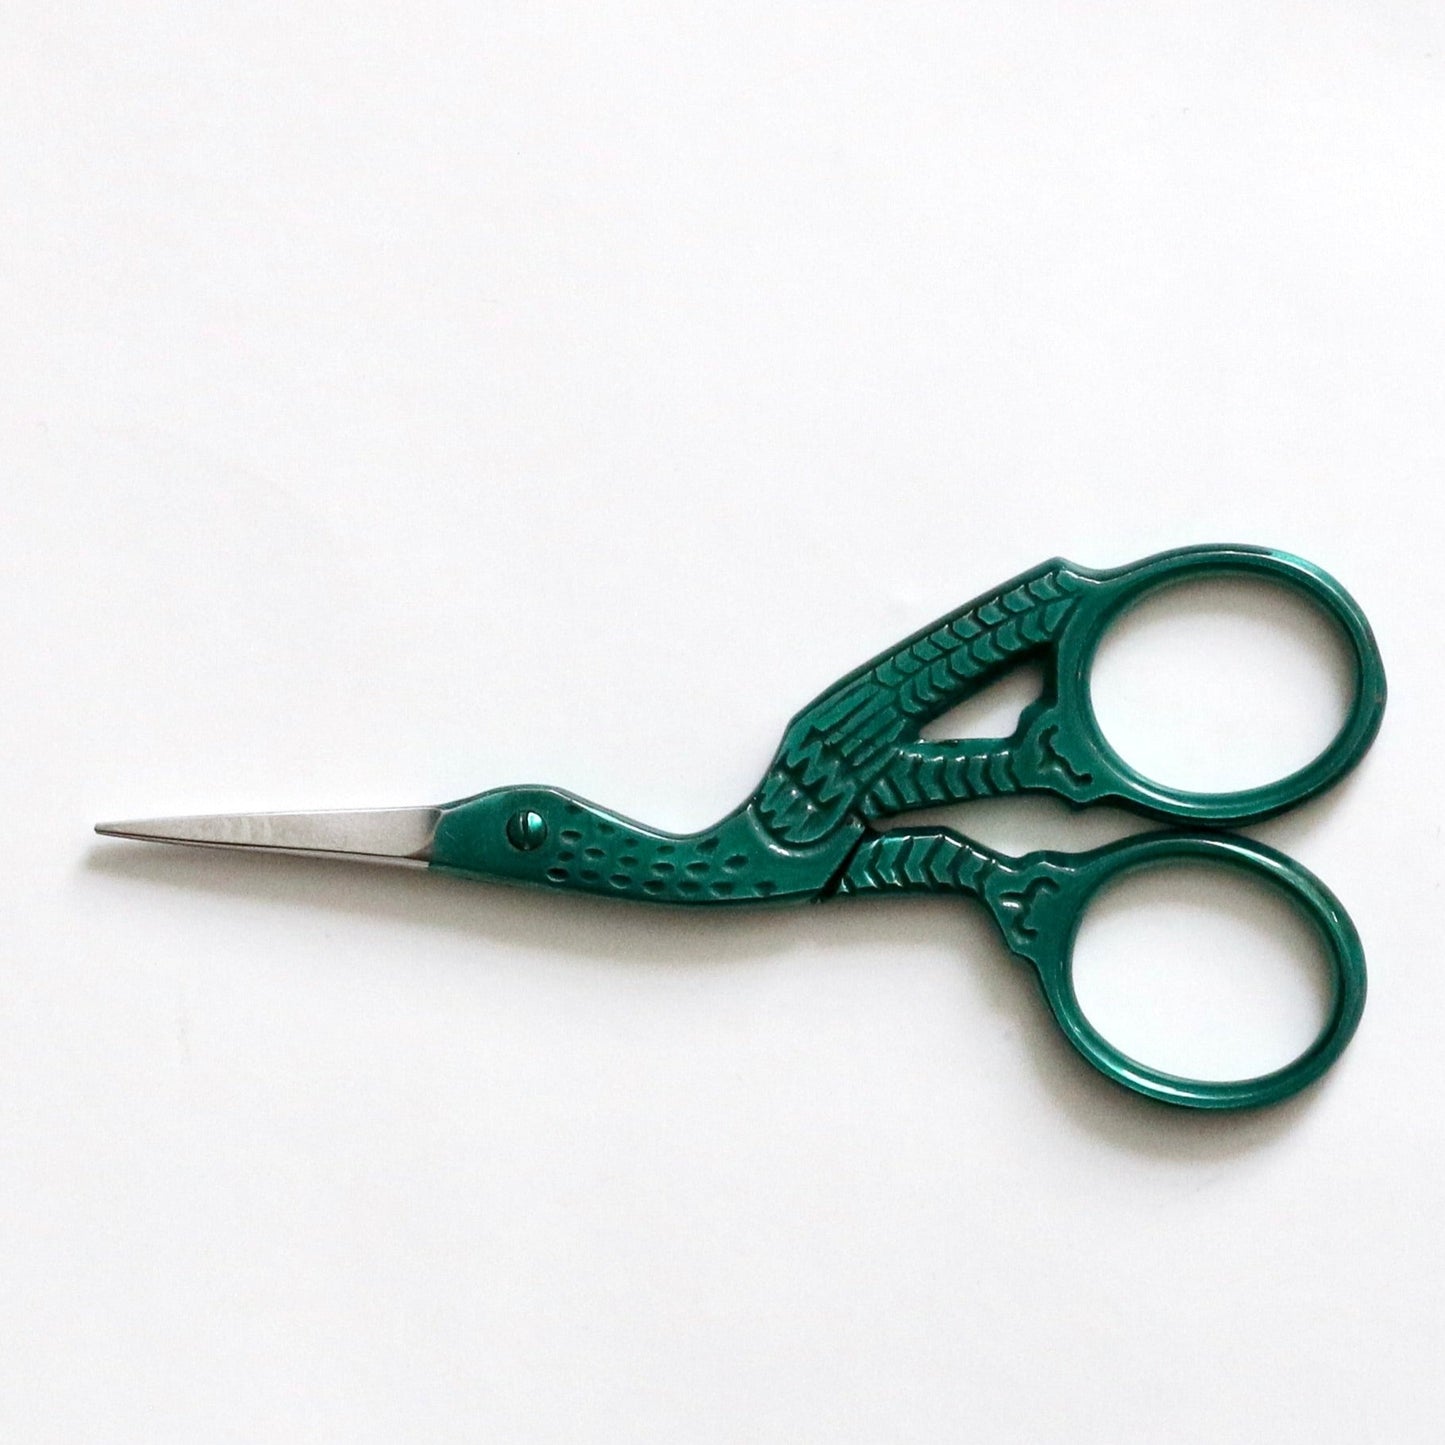 Embroidery Scissors | 4 Styles